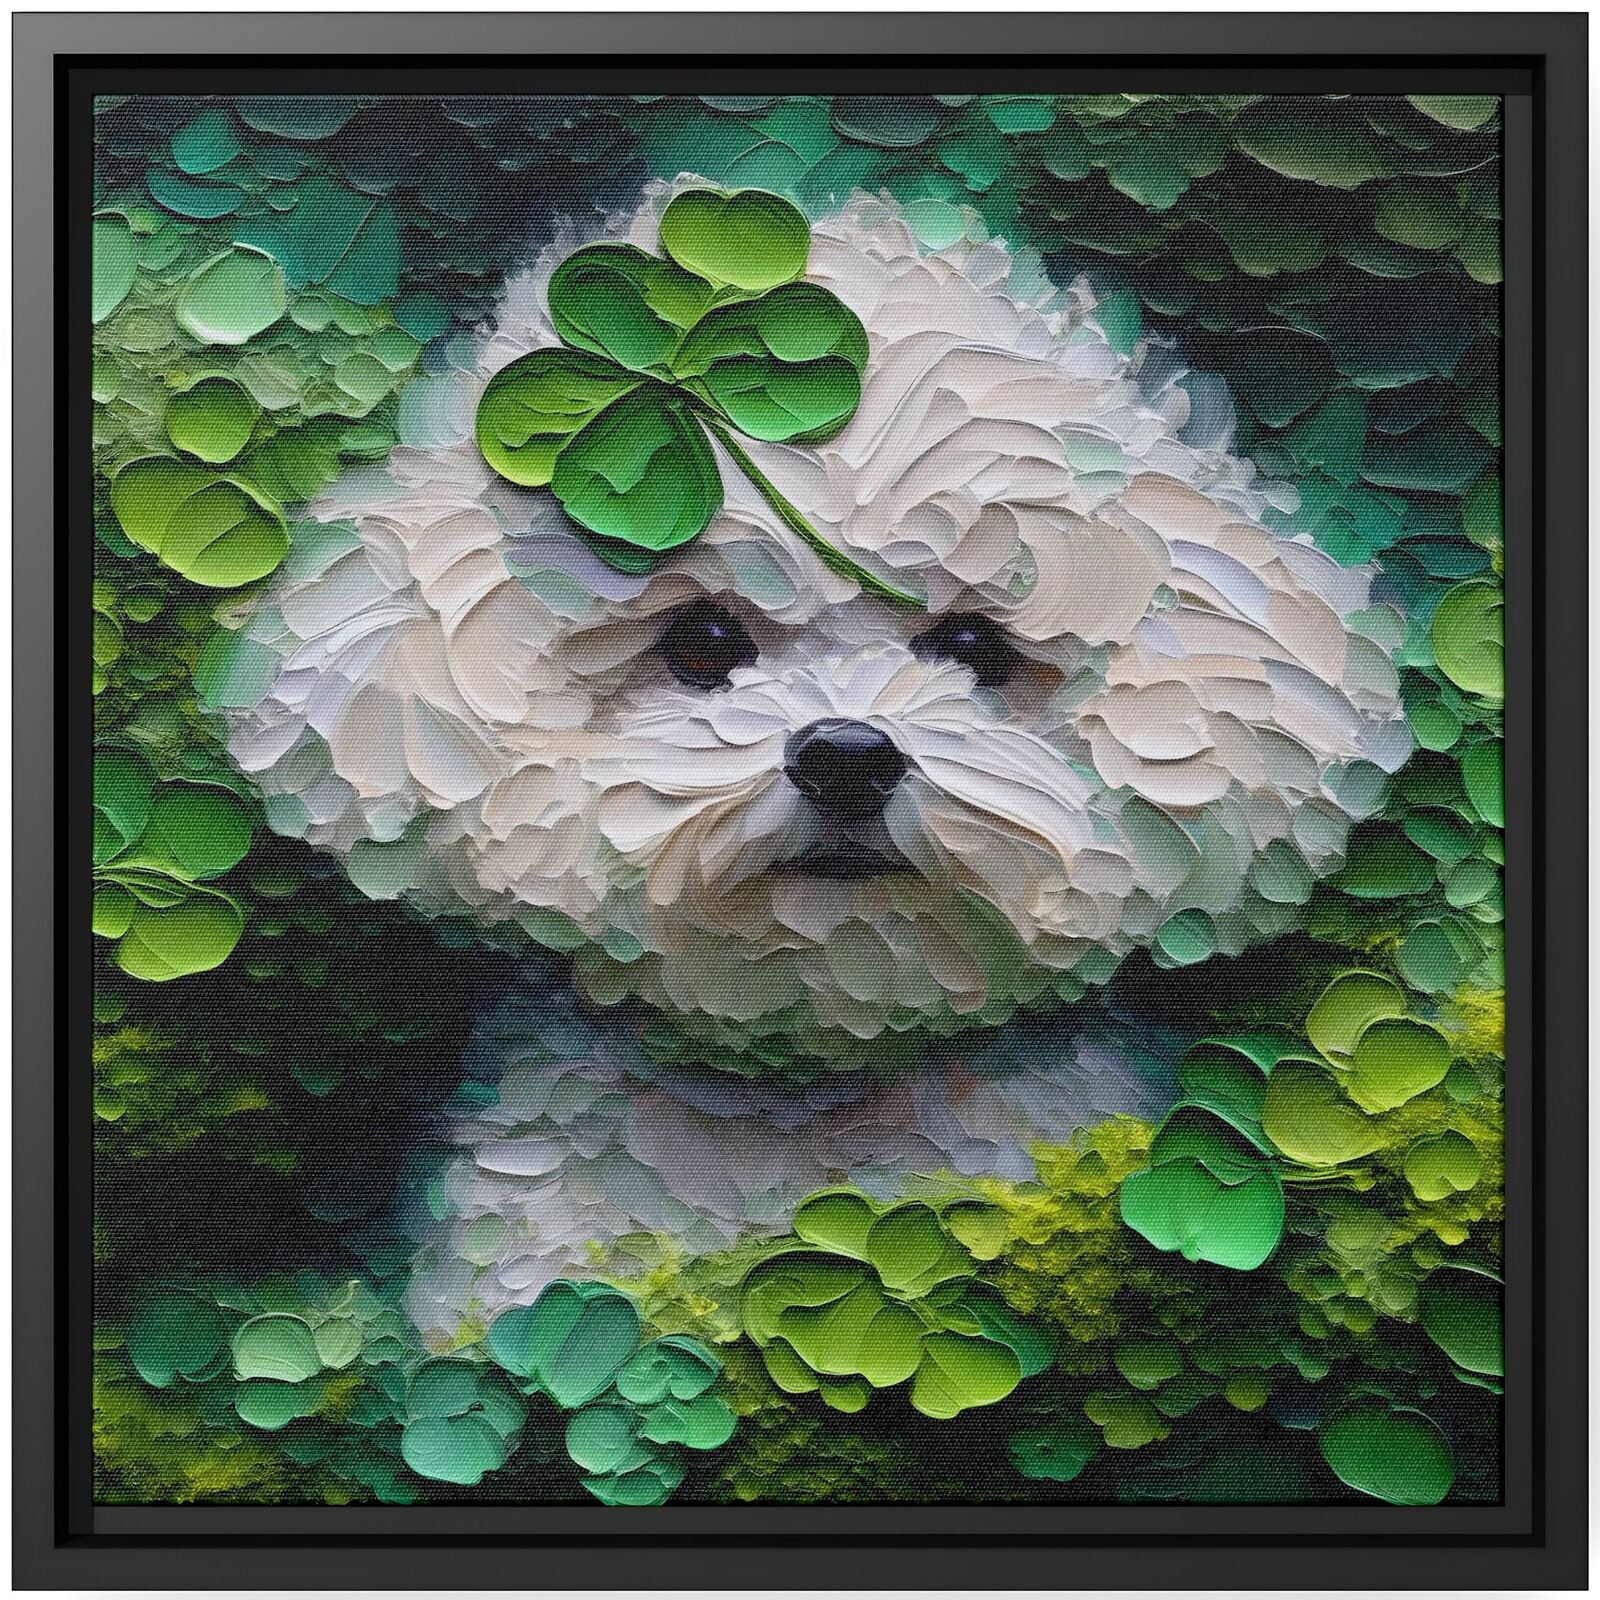 Wall Art Decor Canvas Print Oil Painting Dog Bichon Frise Irish Green Leaf